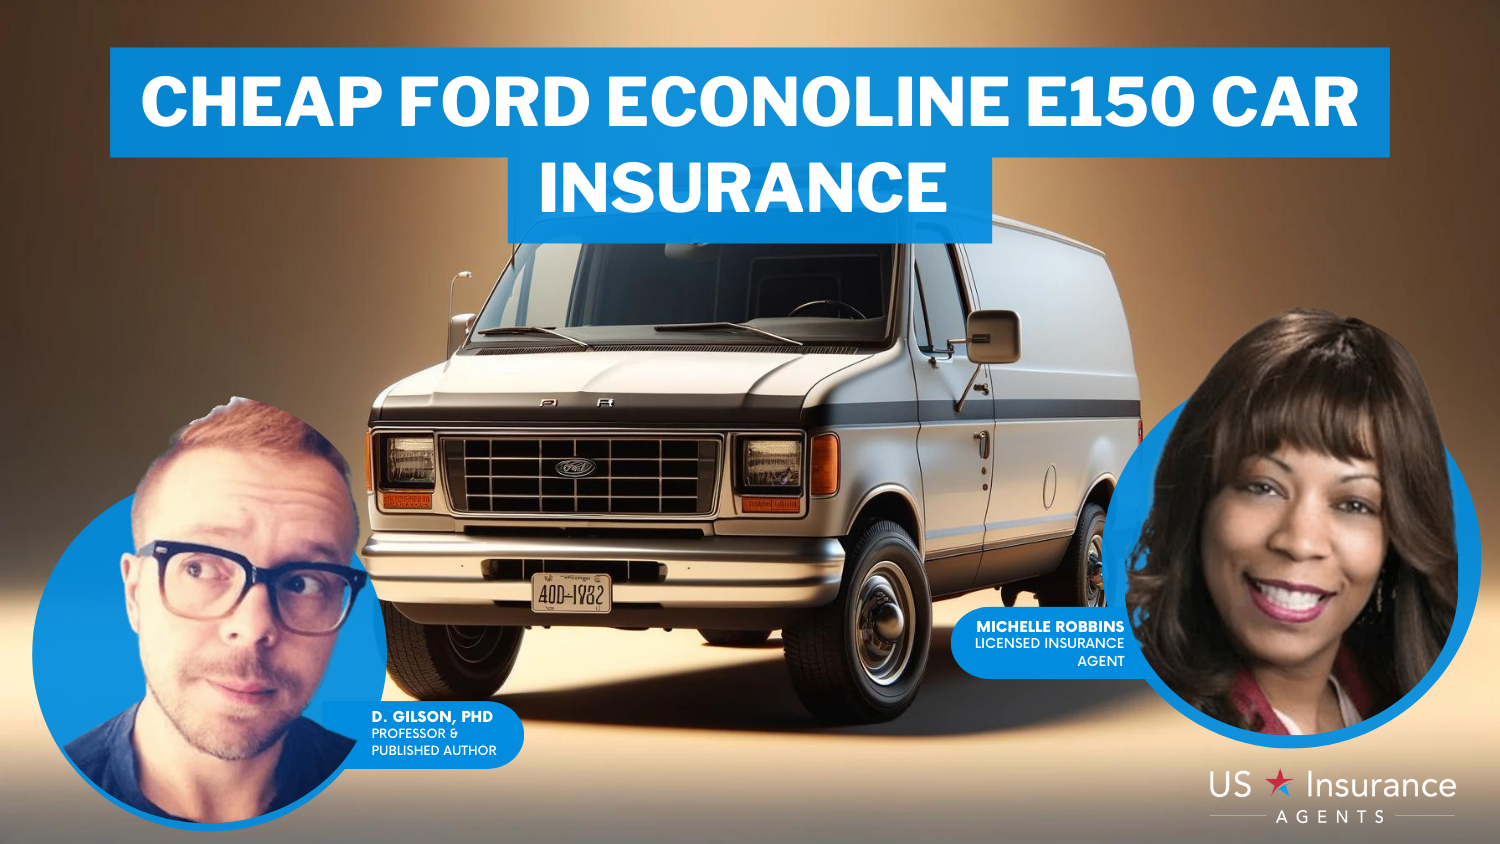 Cheap Ford Econoline E150 Car Insurance: State Farm, USAA, and AAA